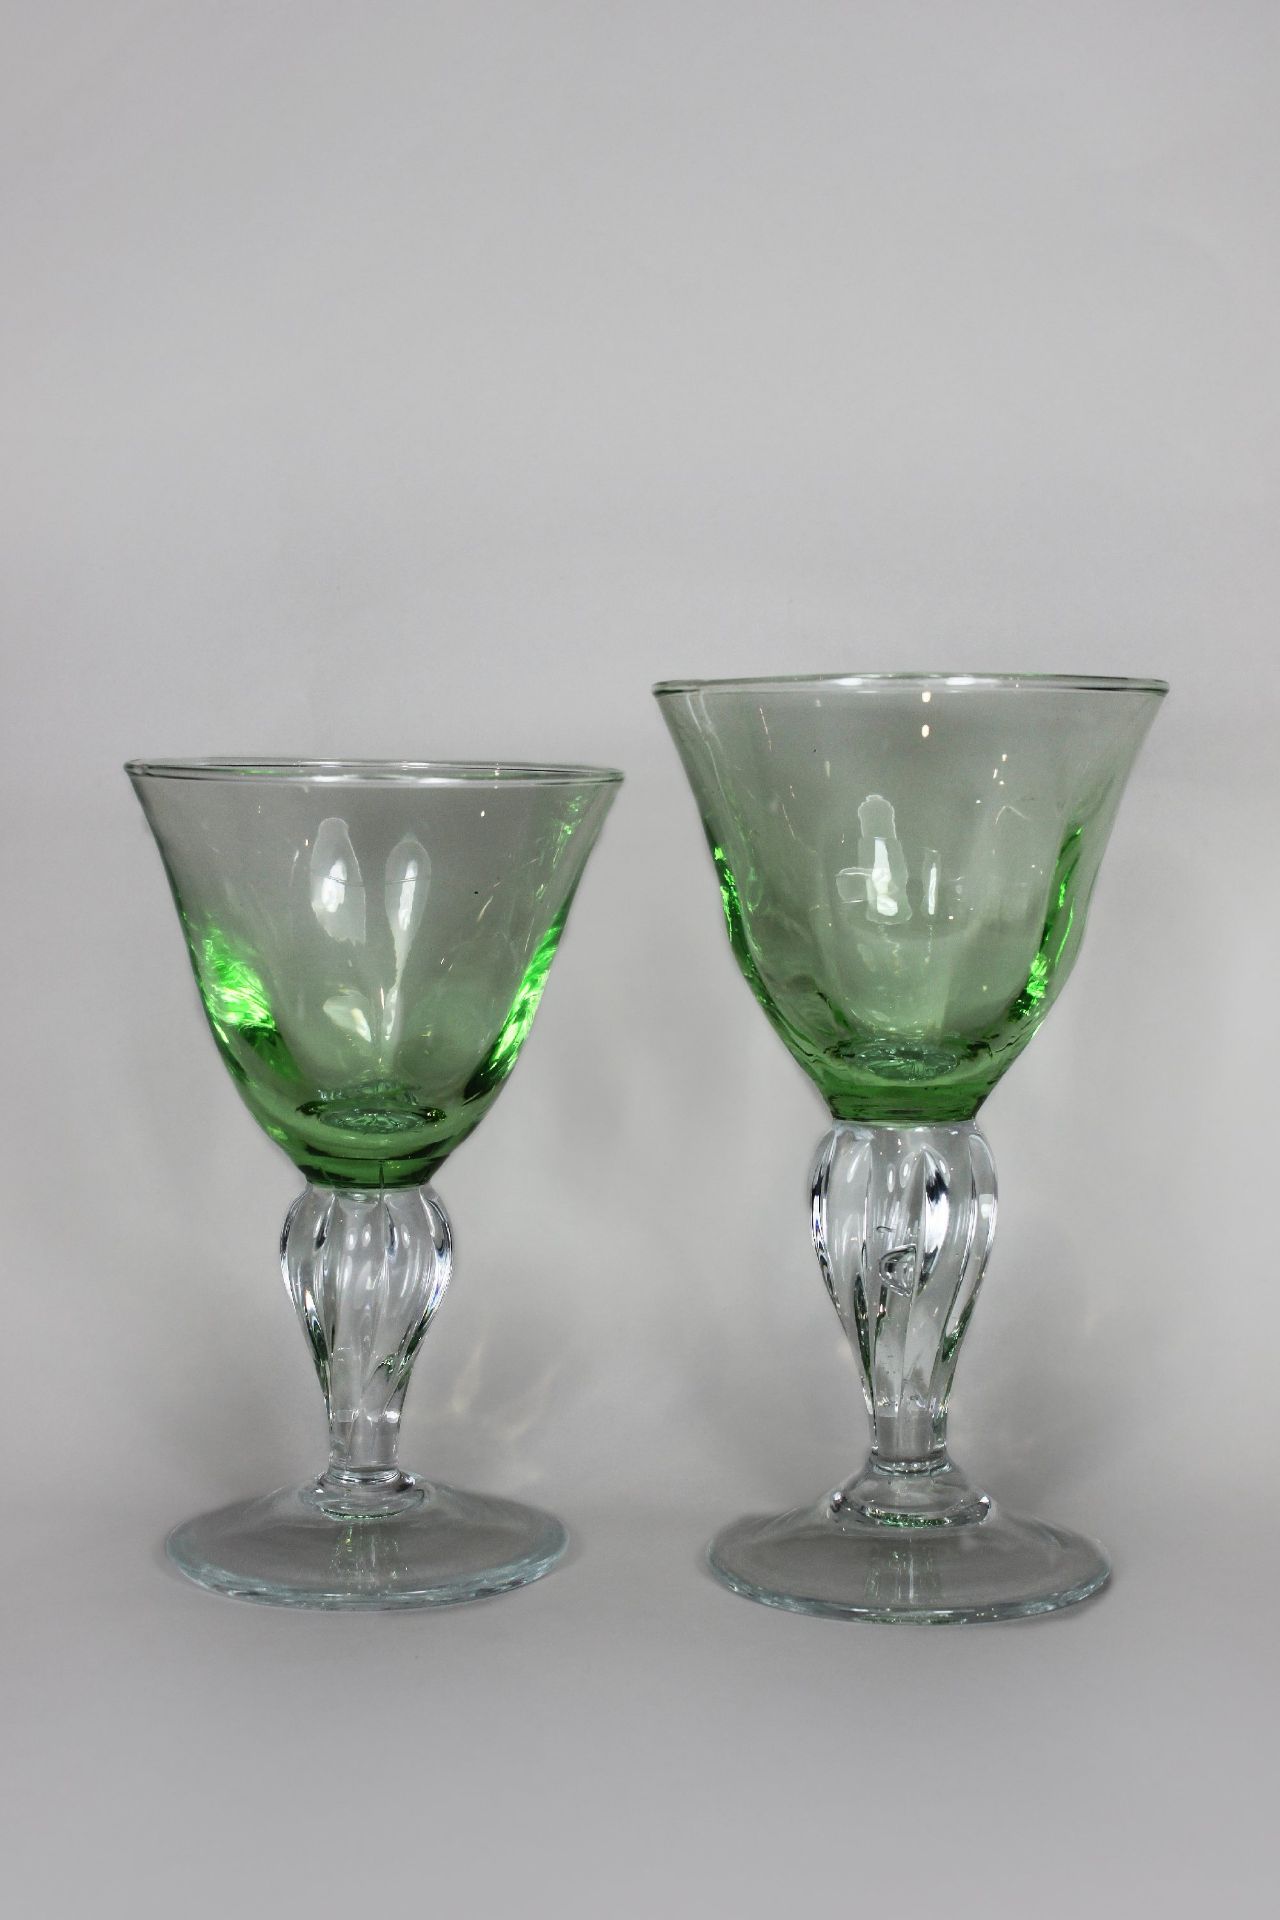 Glaskelche 7 Stk., Jugendstil, farbloses Kristalglas, grün überfangen, fünf große Kelche, zwei< - Image 2 of 2